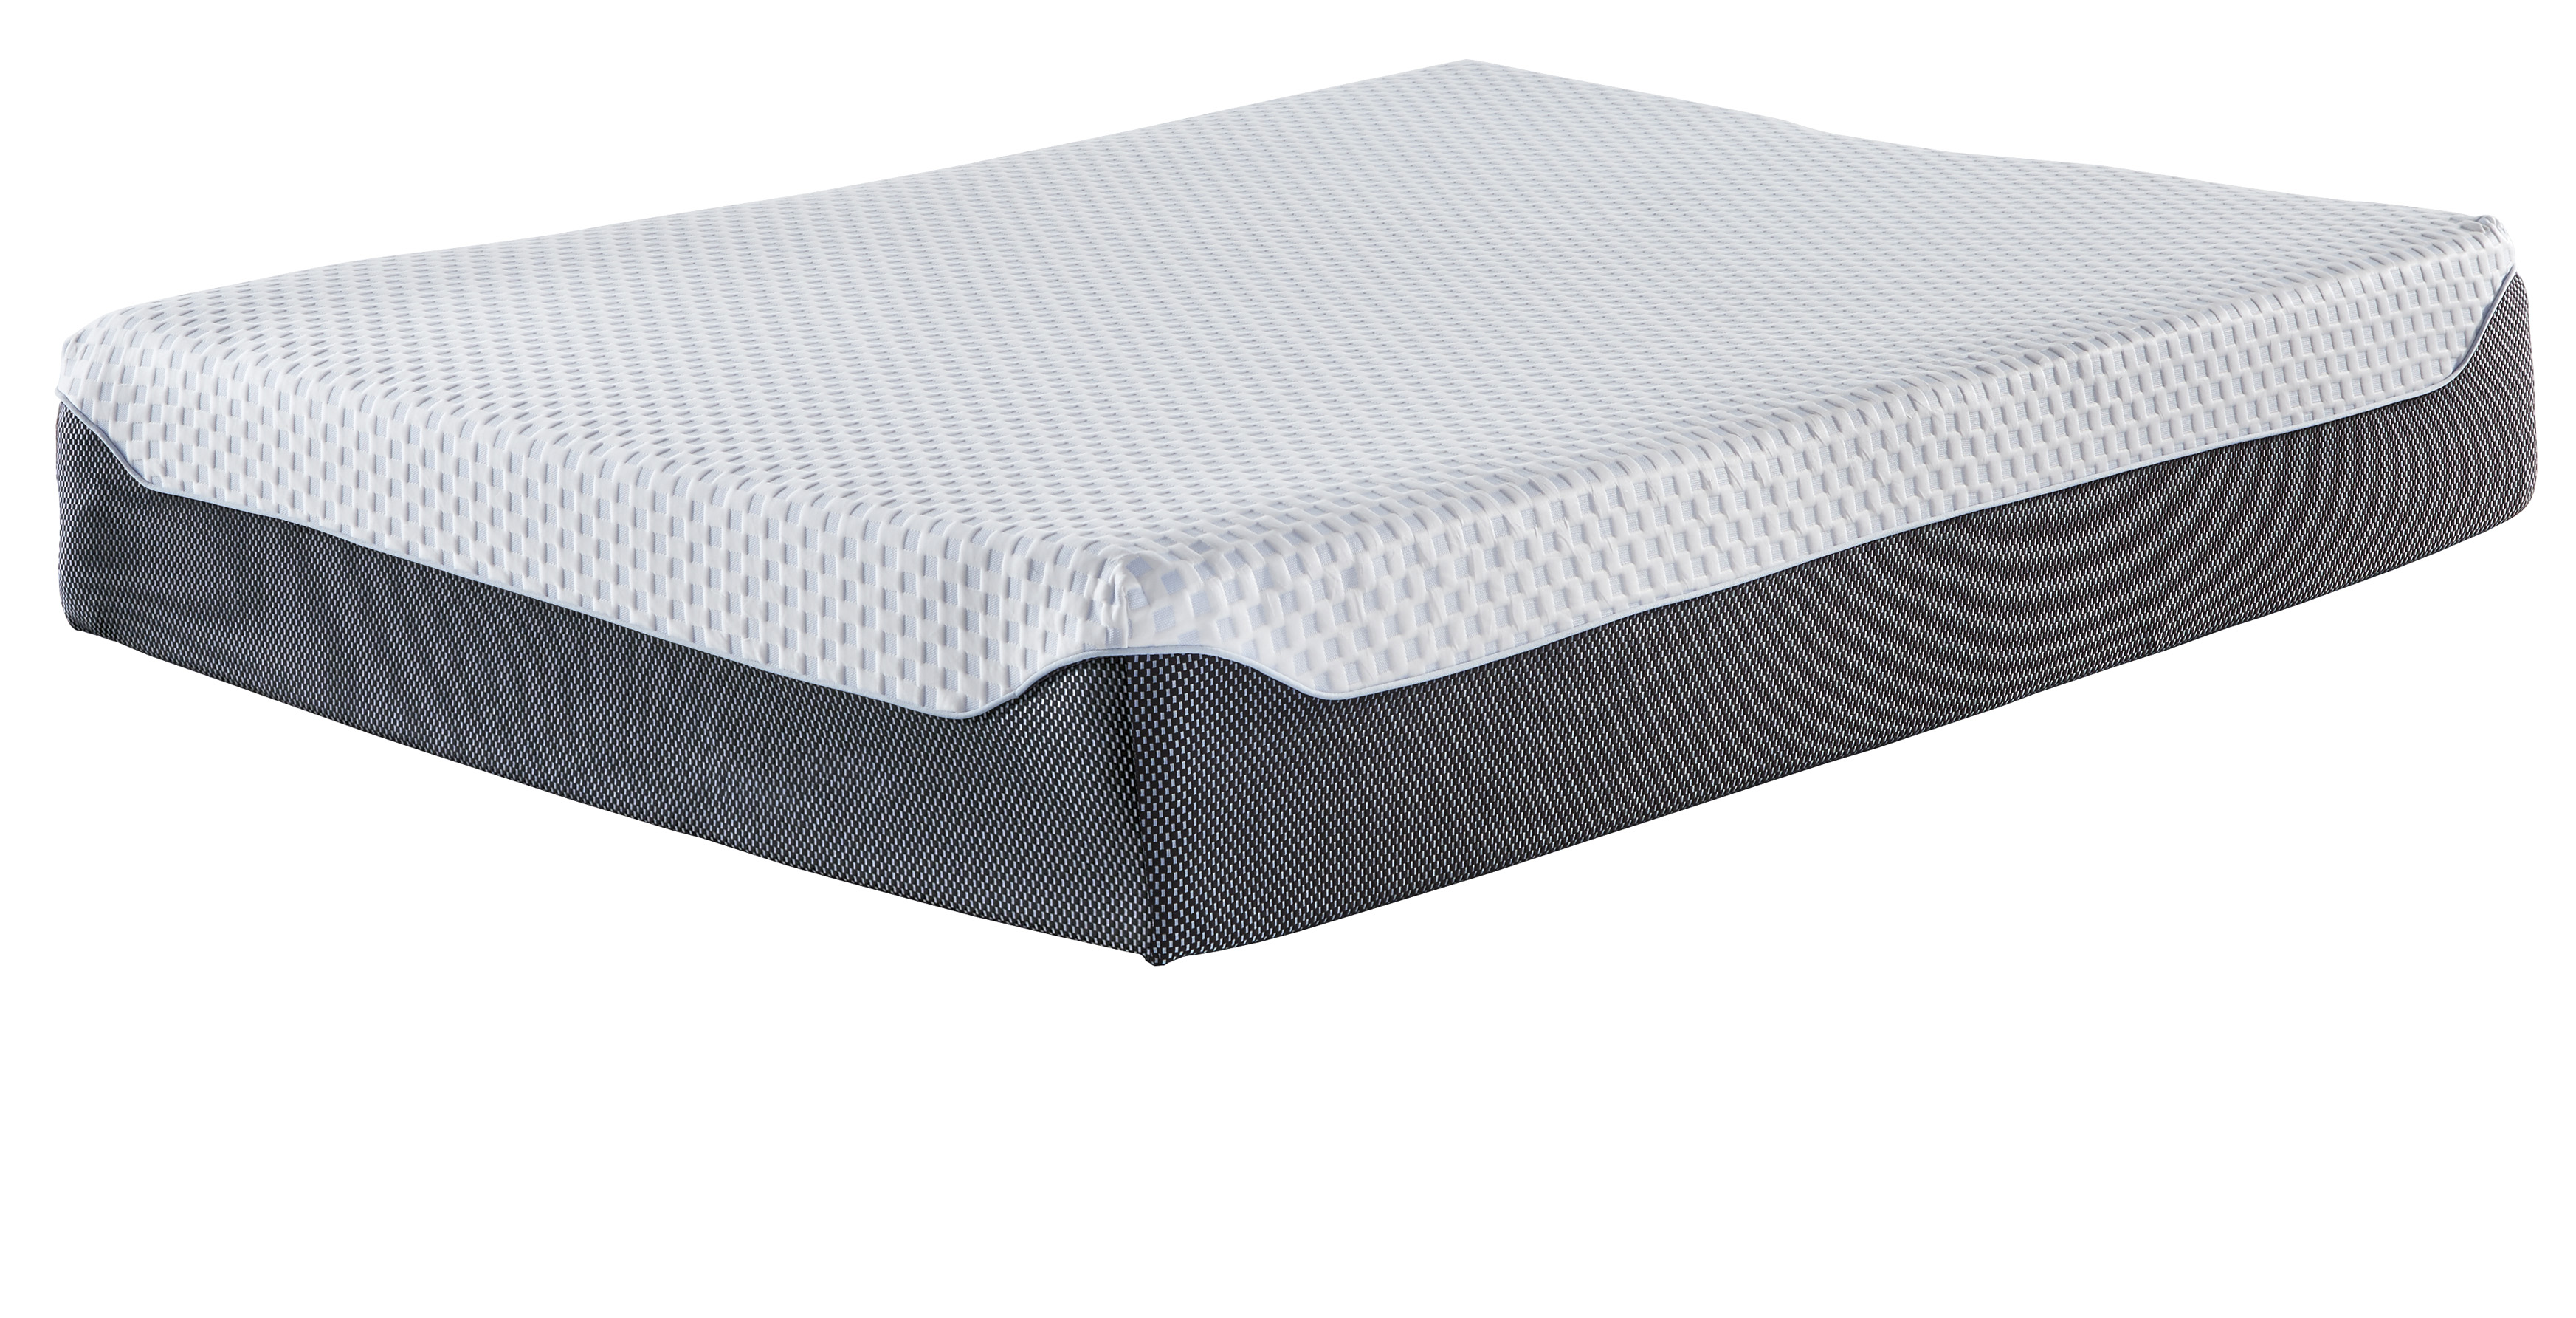 ashley sleep chime memory foam mattress stores